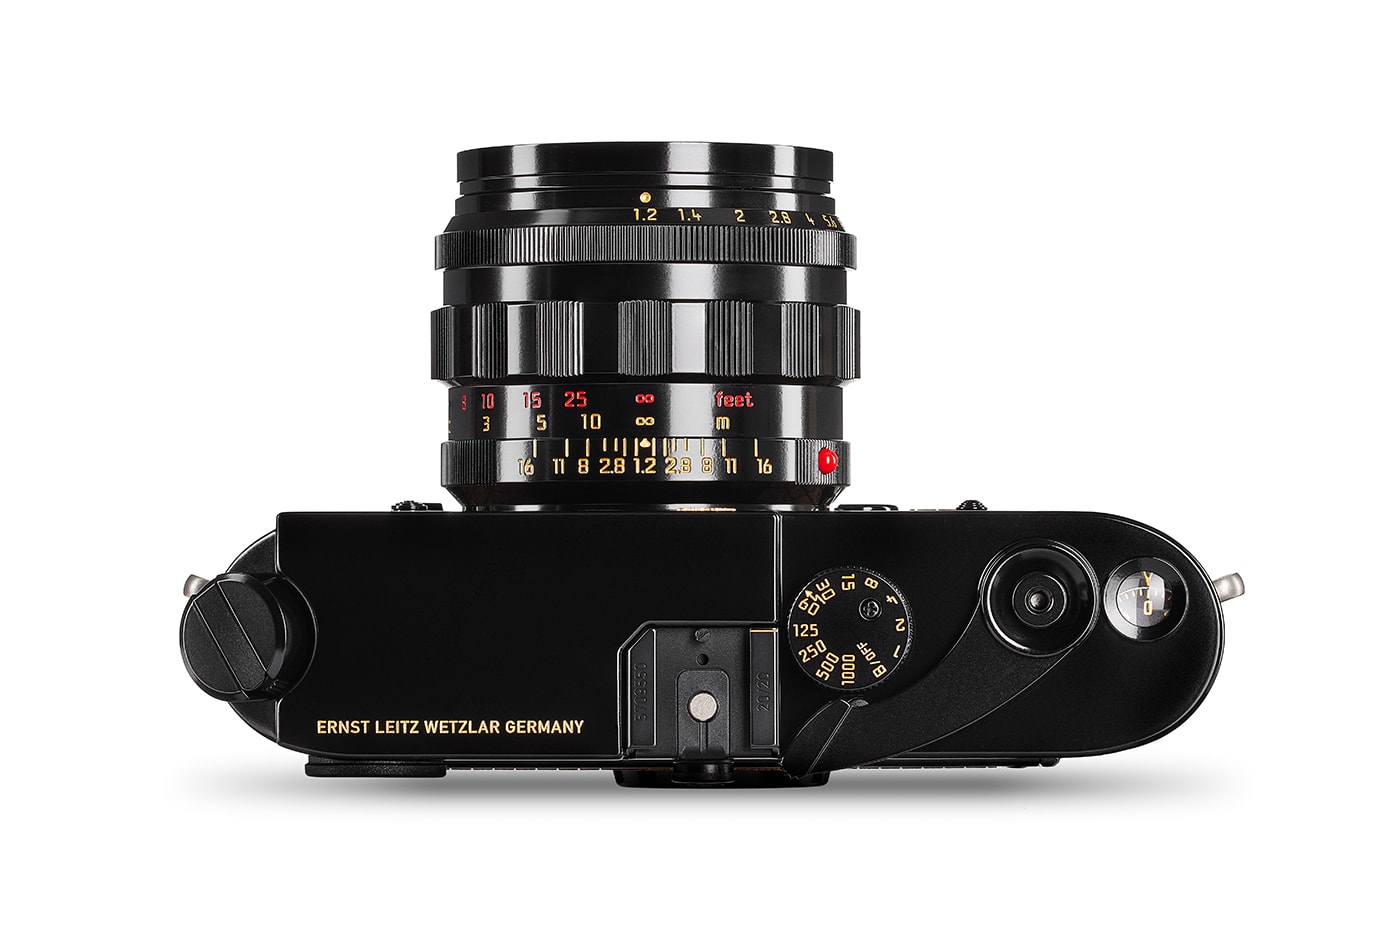 Leica 推出「Leitz Auction」限量版 M6 相機